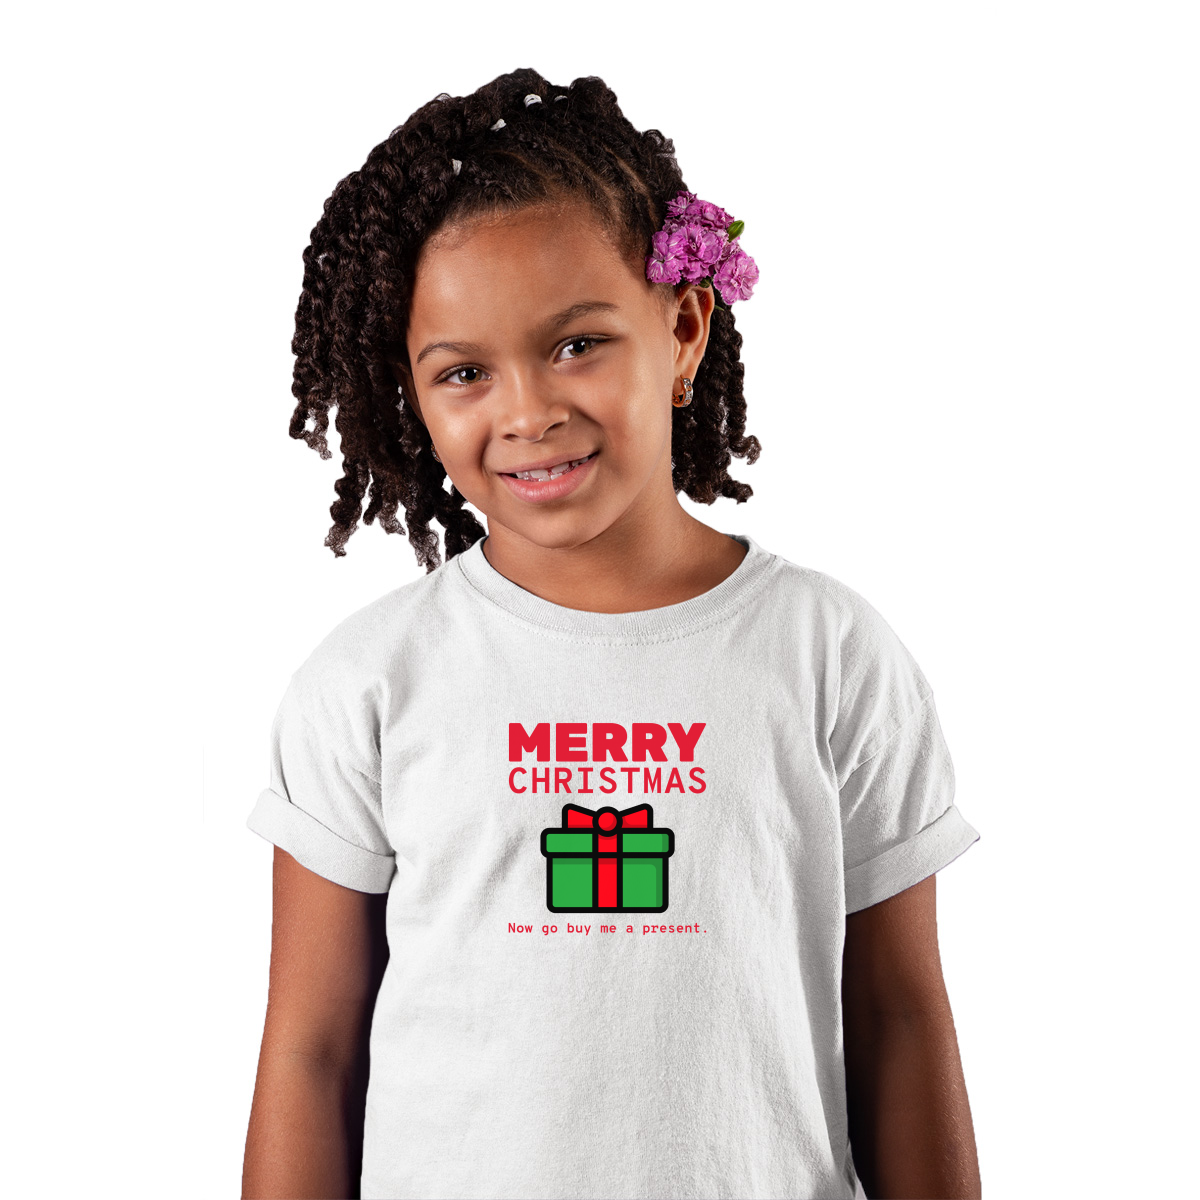 Merry Christmas Now Go Buy Me a Present Kids T-shirt | White